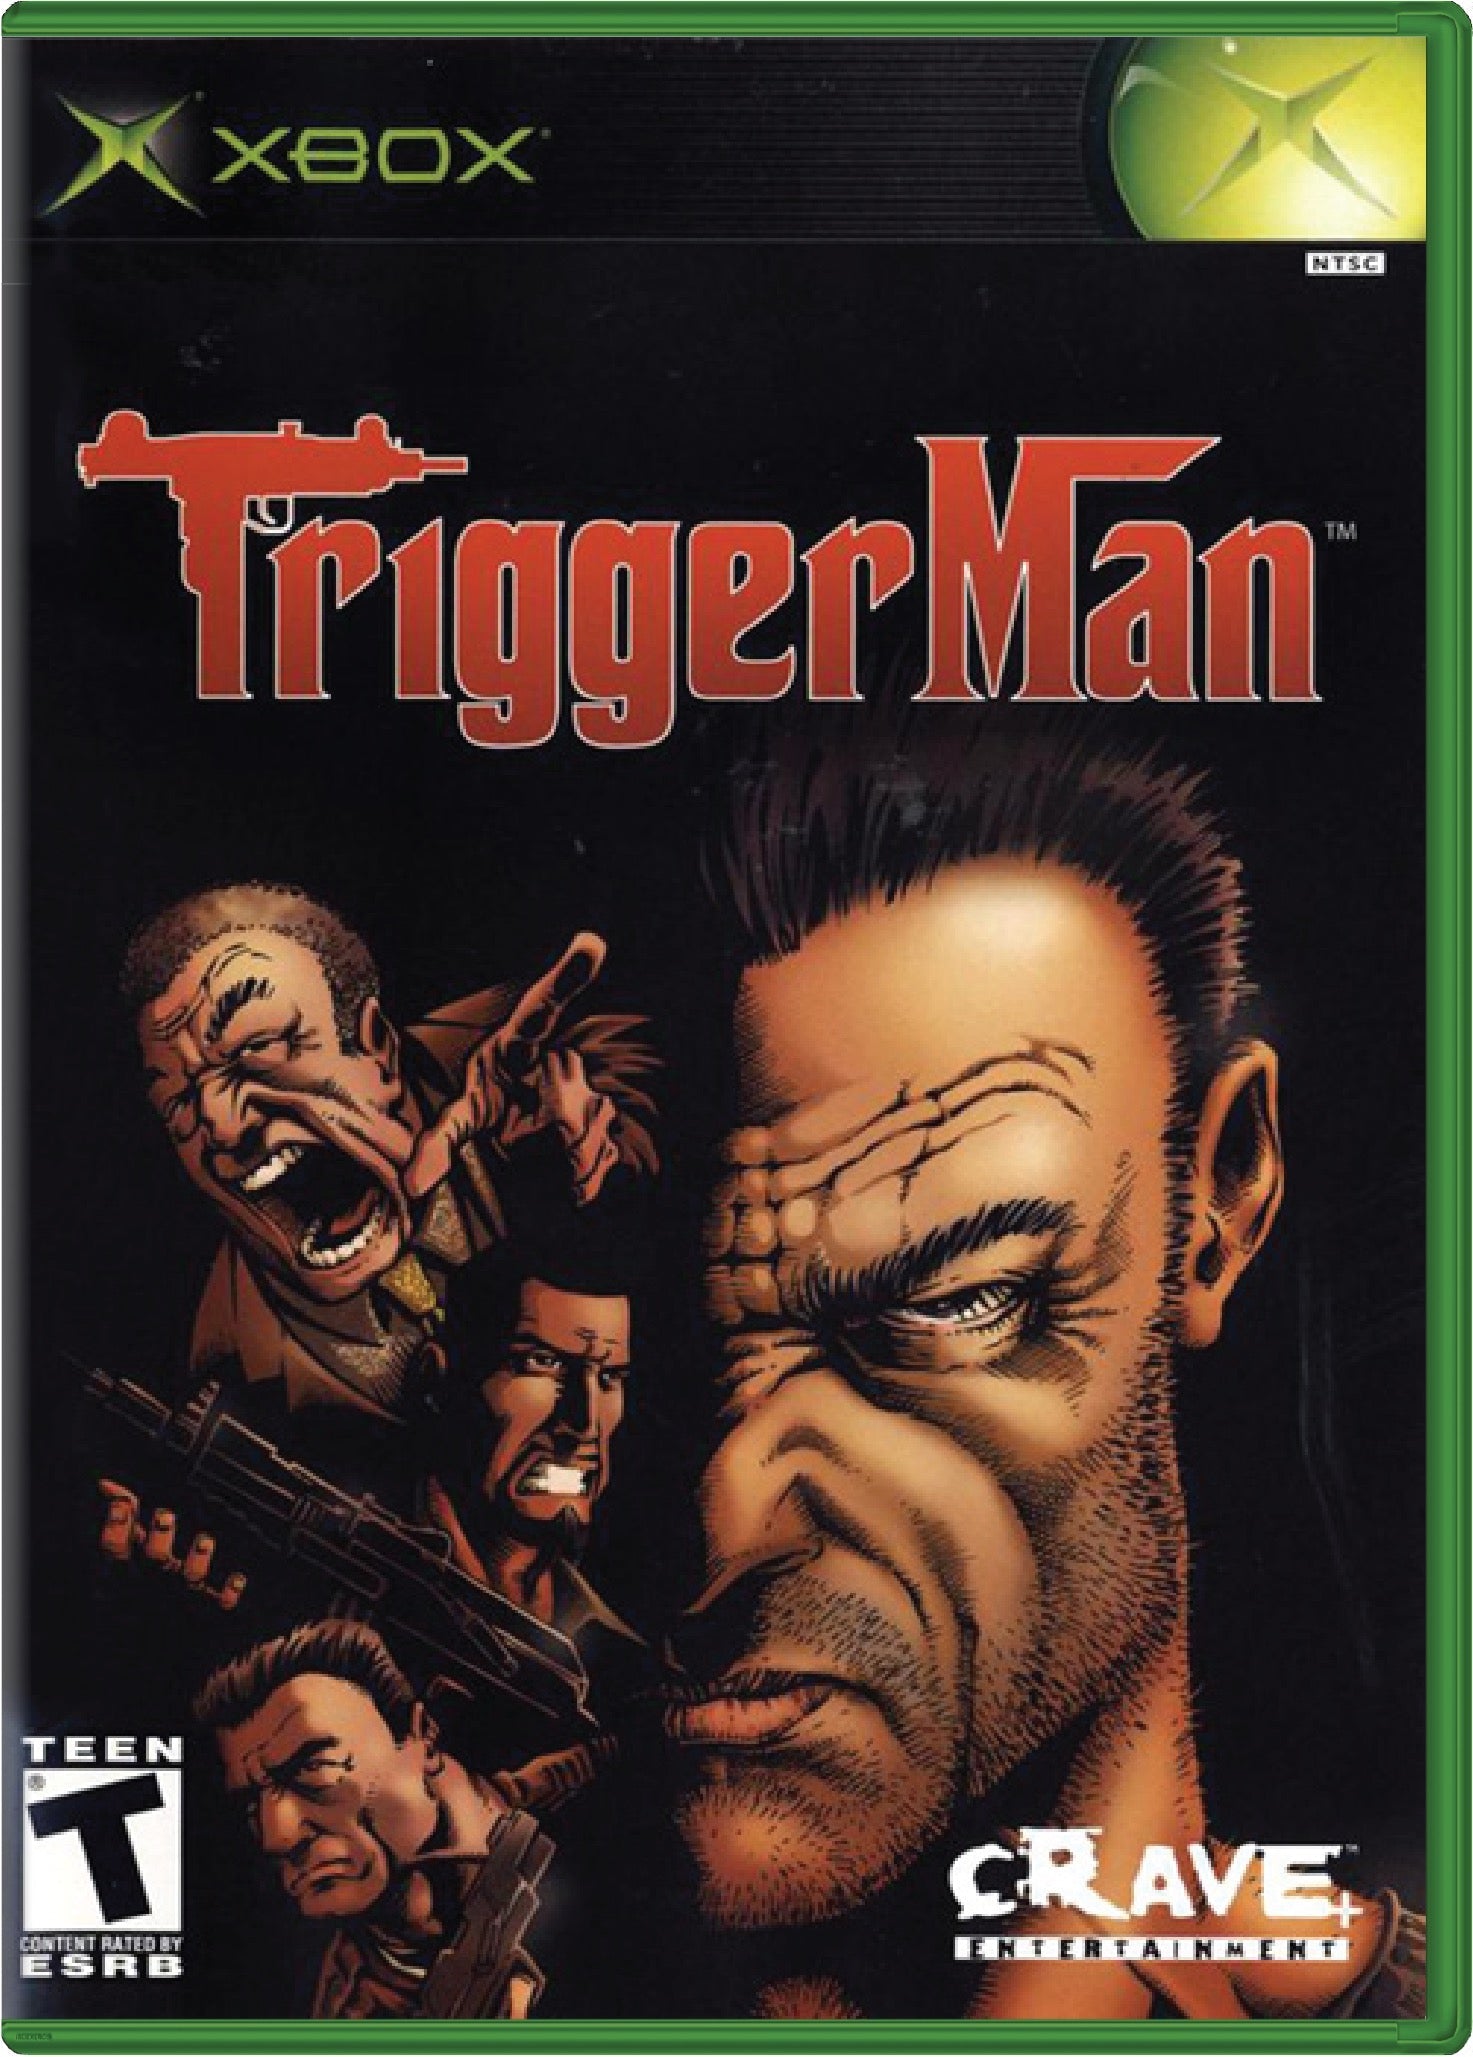 Trigger Man Cover Art